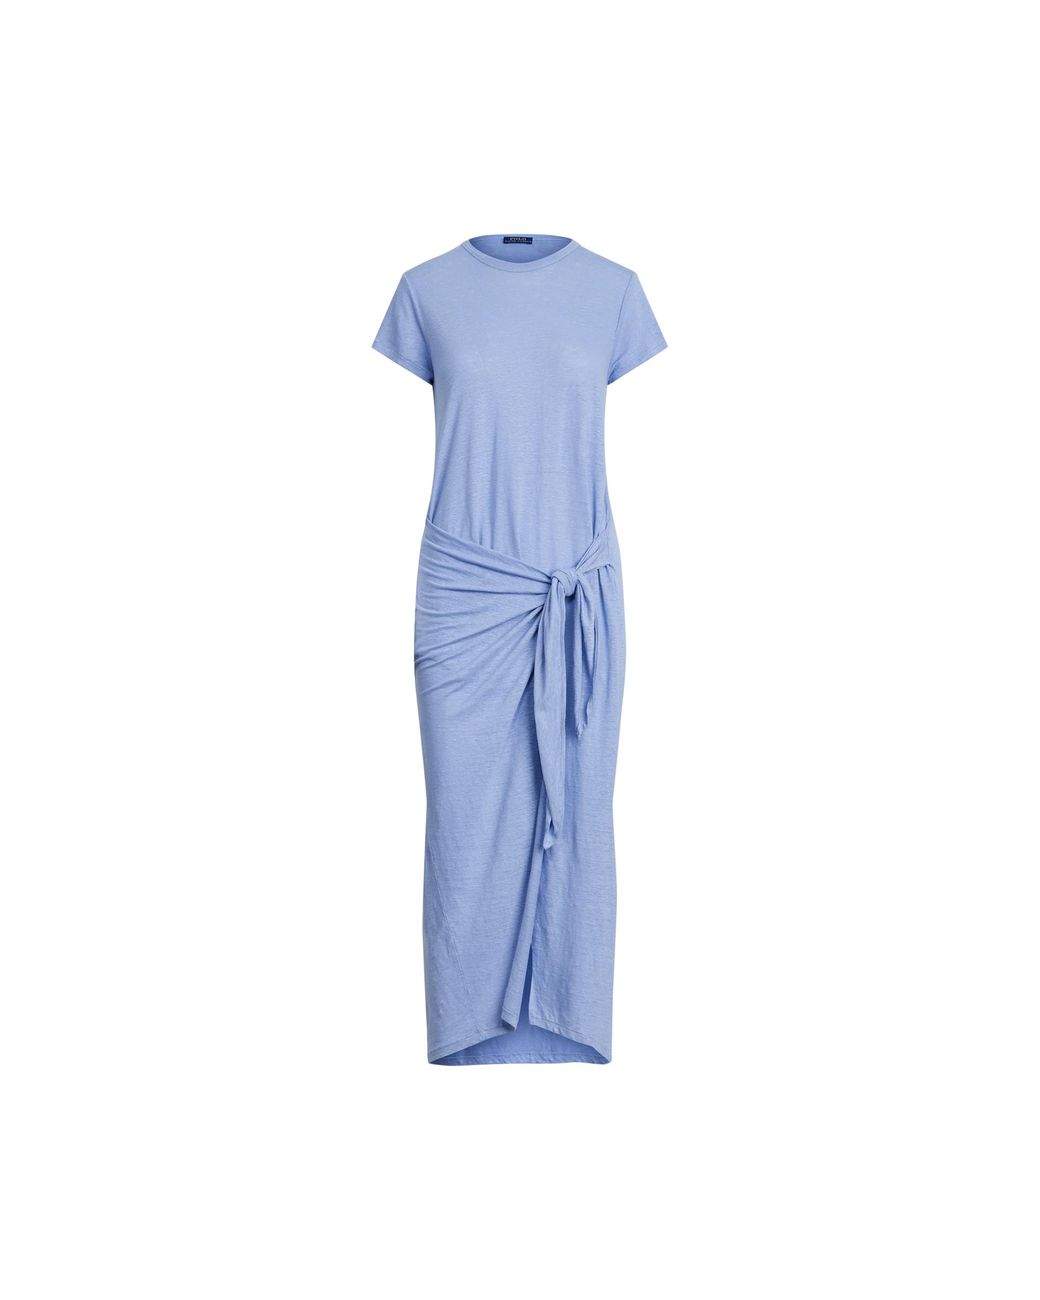 Polo Ralph Lauren Linen Tee Wrap Dress in Blue | Lyst